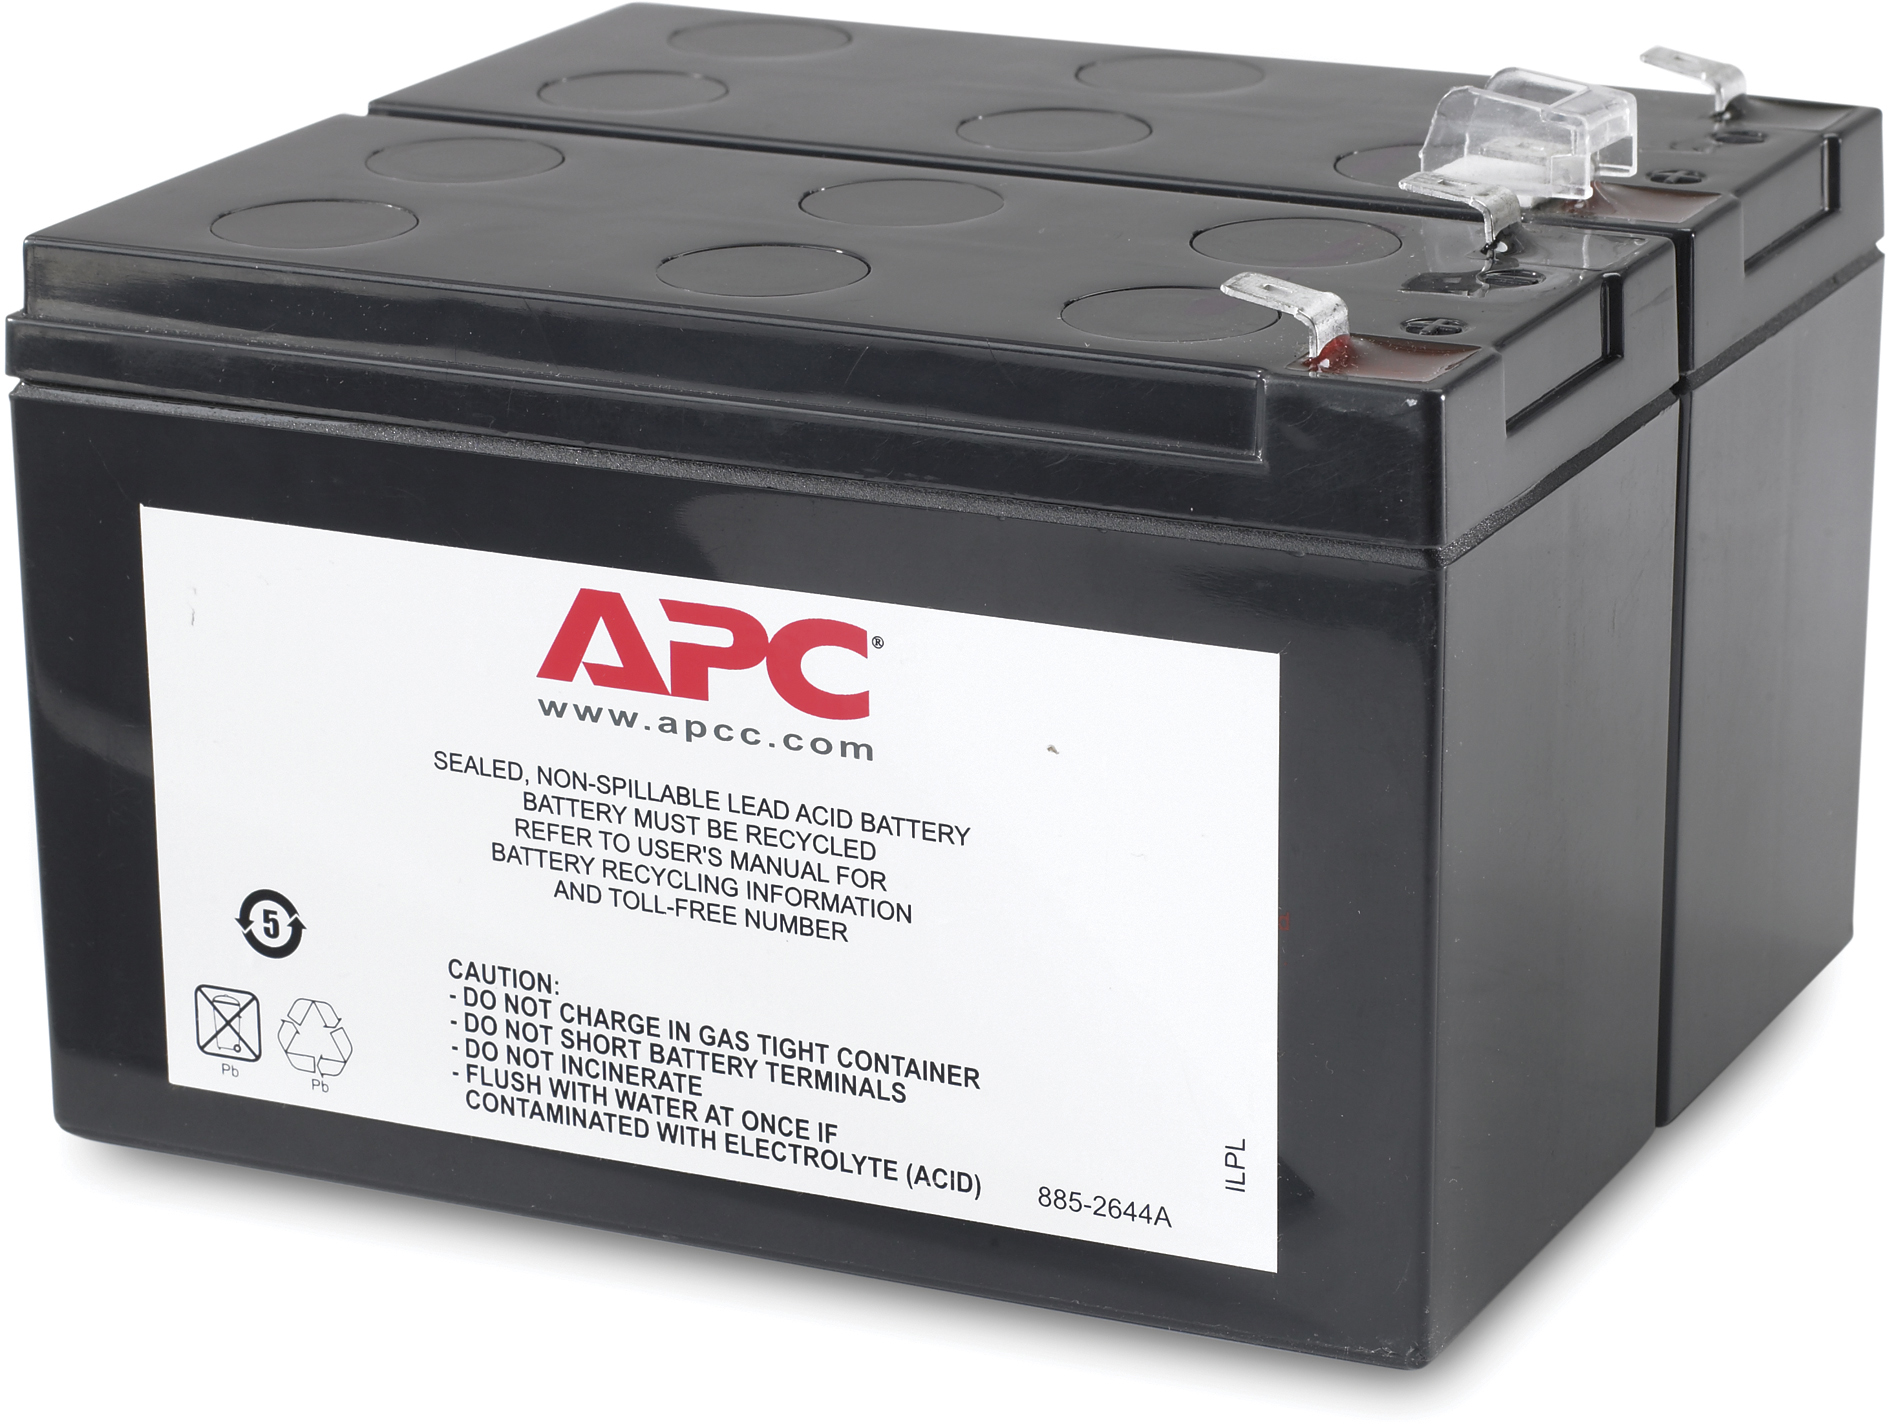 Apc batteries. APC аккумулятор apcrbc113. Аккумуляторная батарея APC apcrbc106. Батарея ИБП APC apcrbc113. АКБ APC RBC-105.